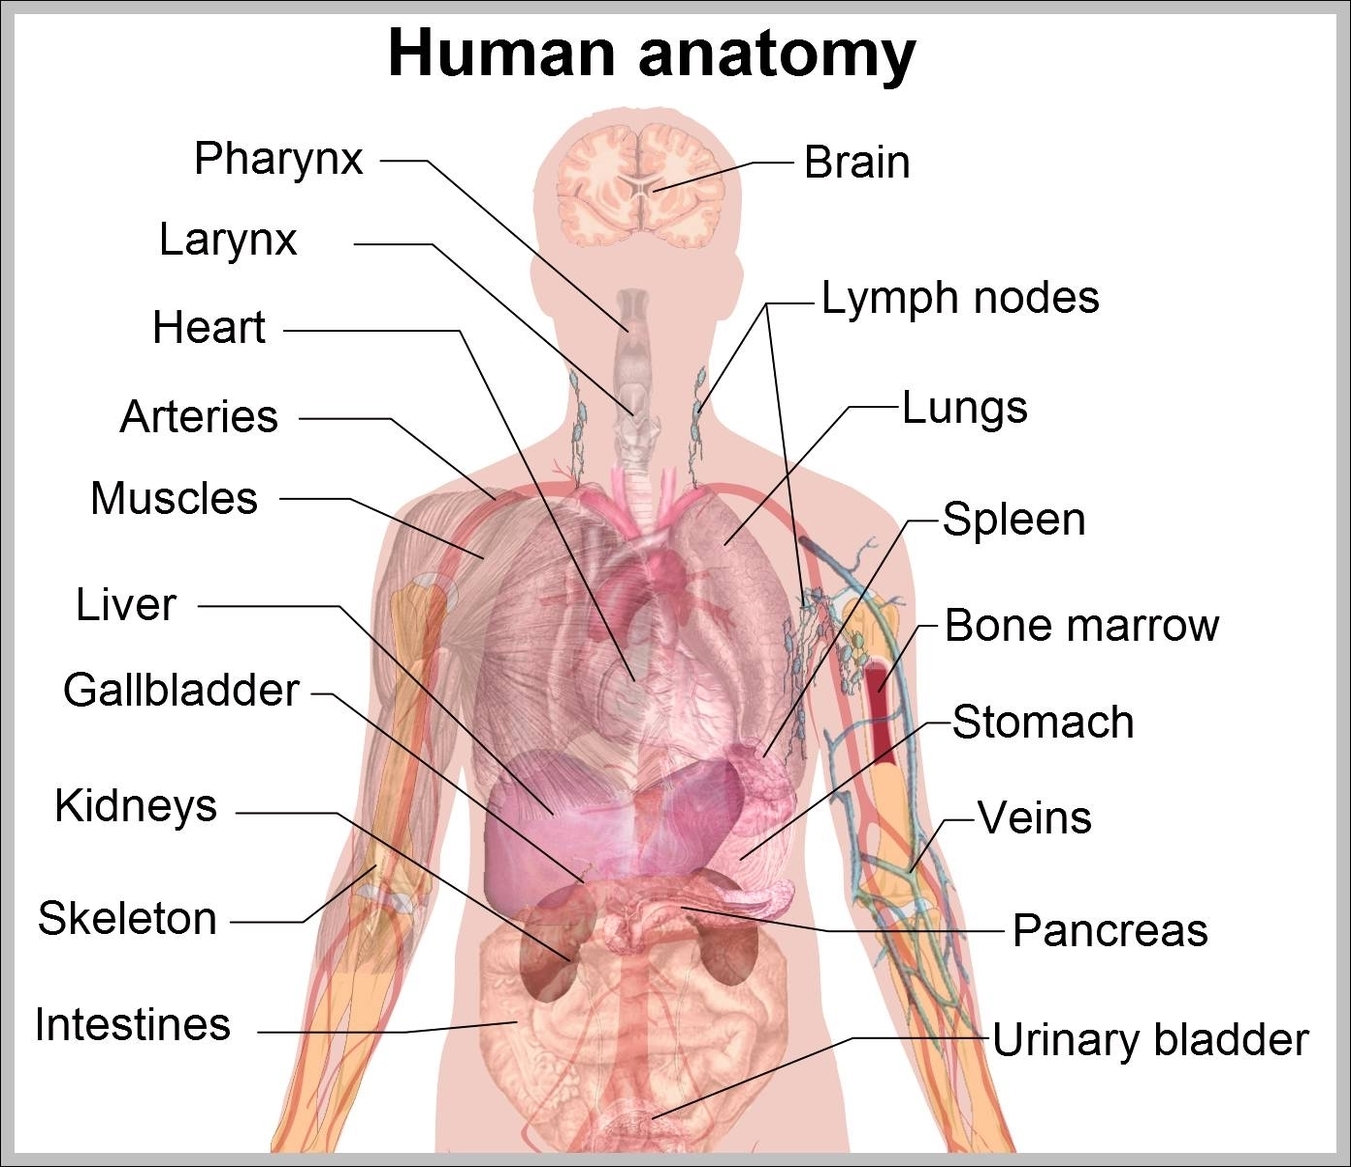 anatomical human body